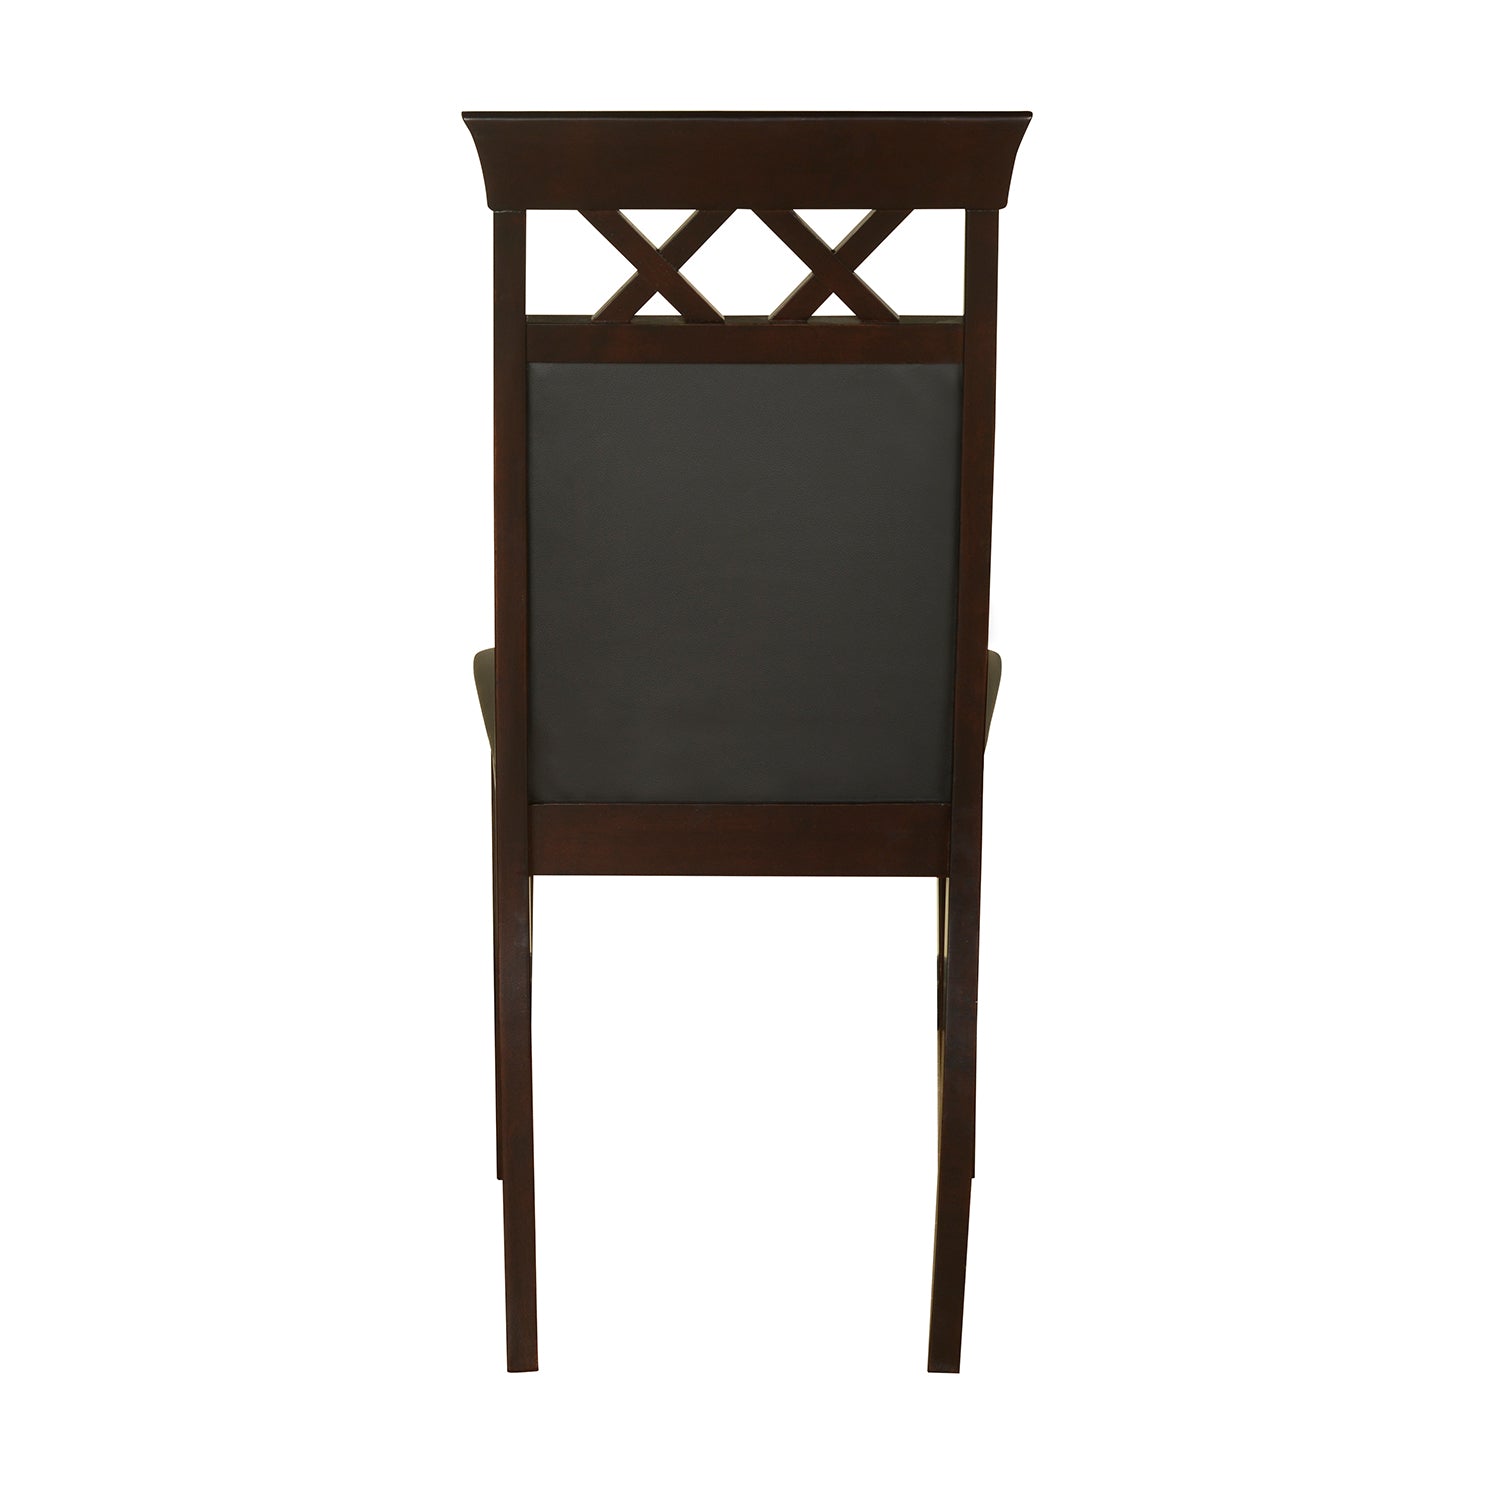 Mauna Dining Chair Set of 2 (Dark Cappucino)